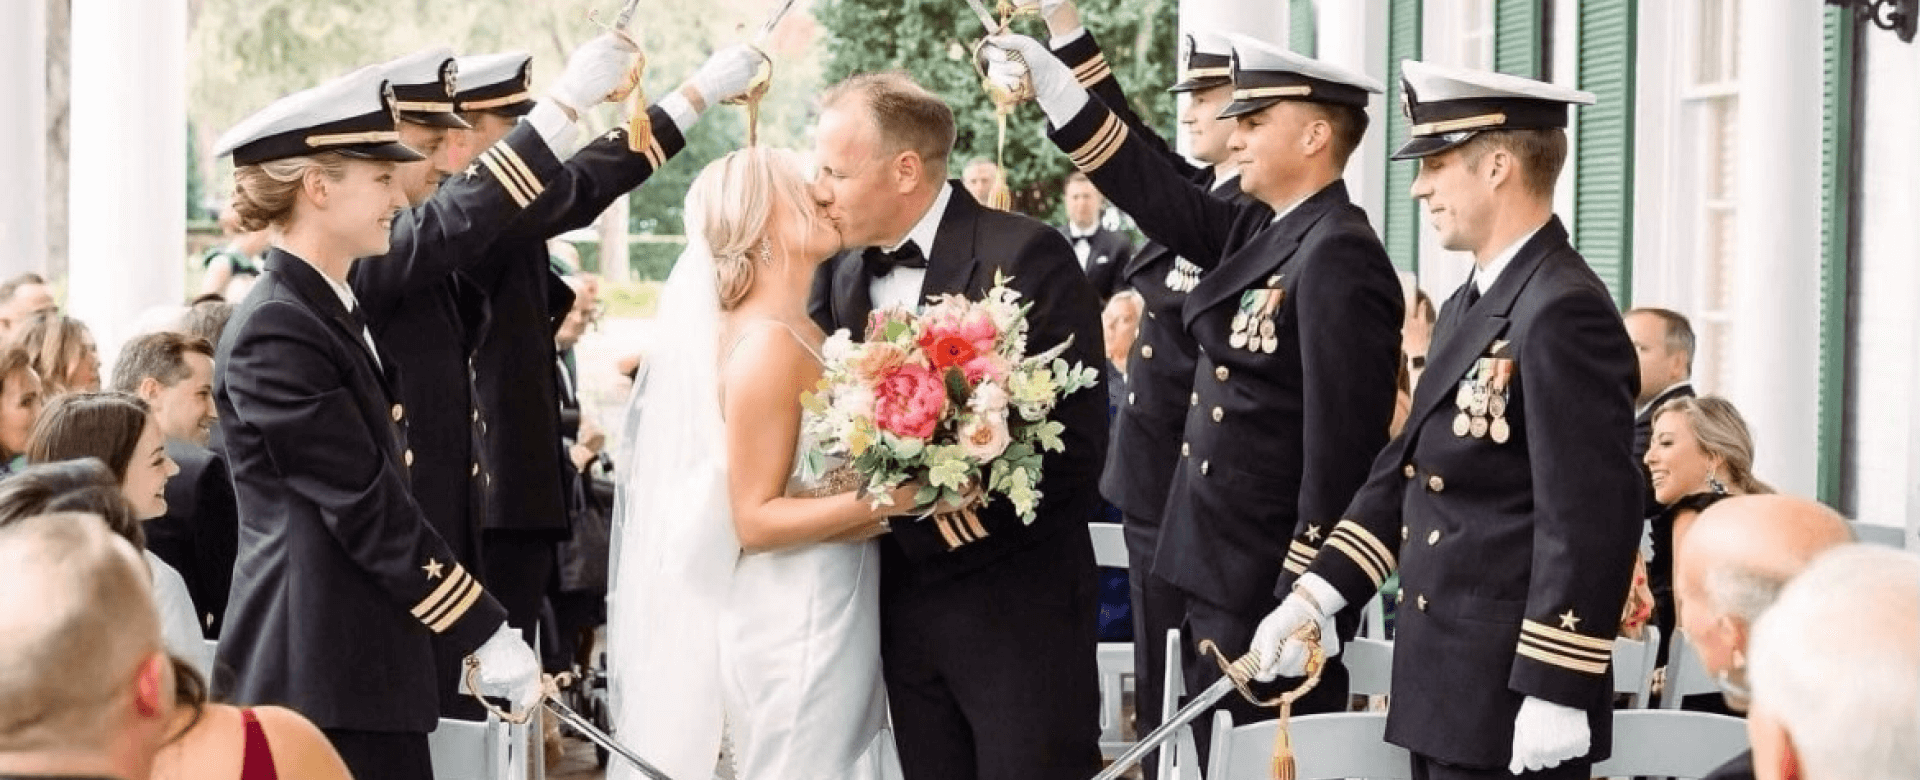 Military Wedding Theme in Jacksonville Beach